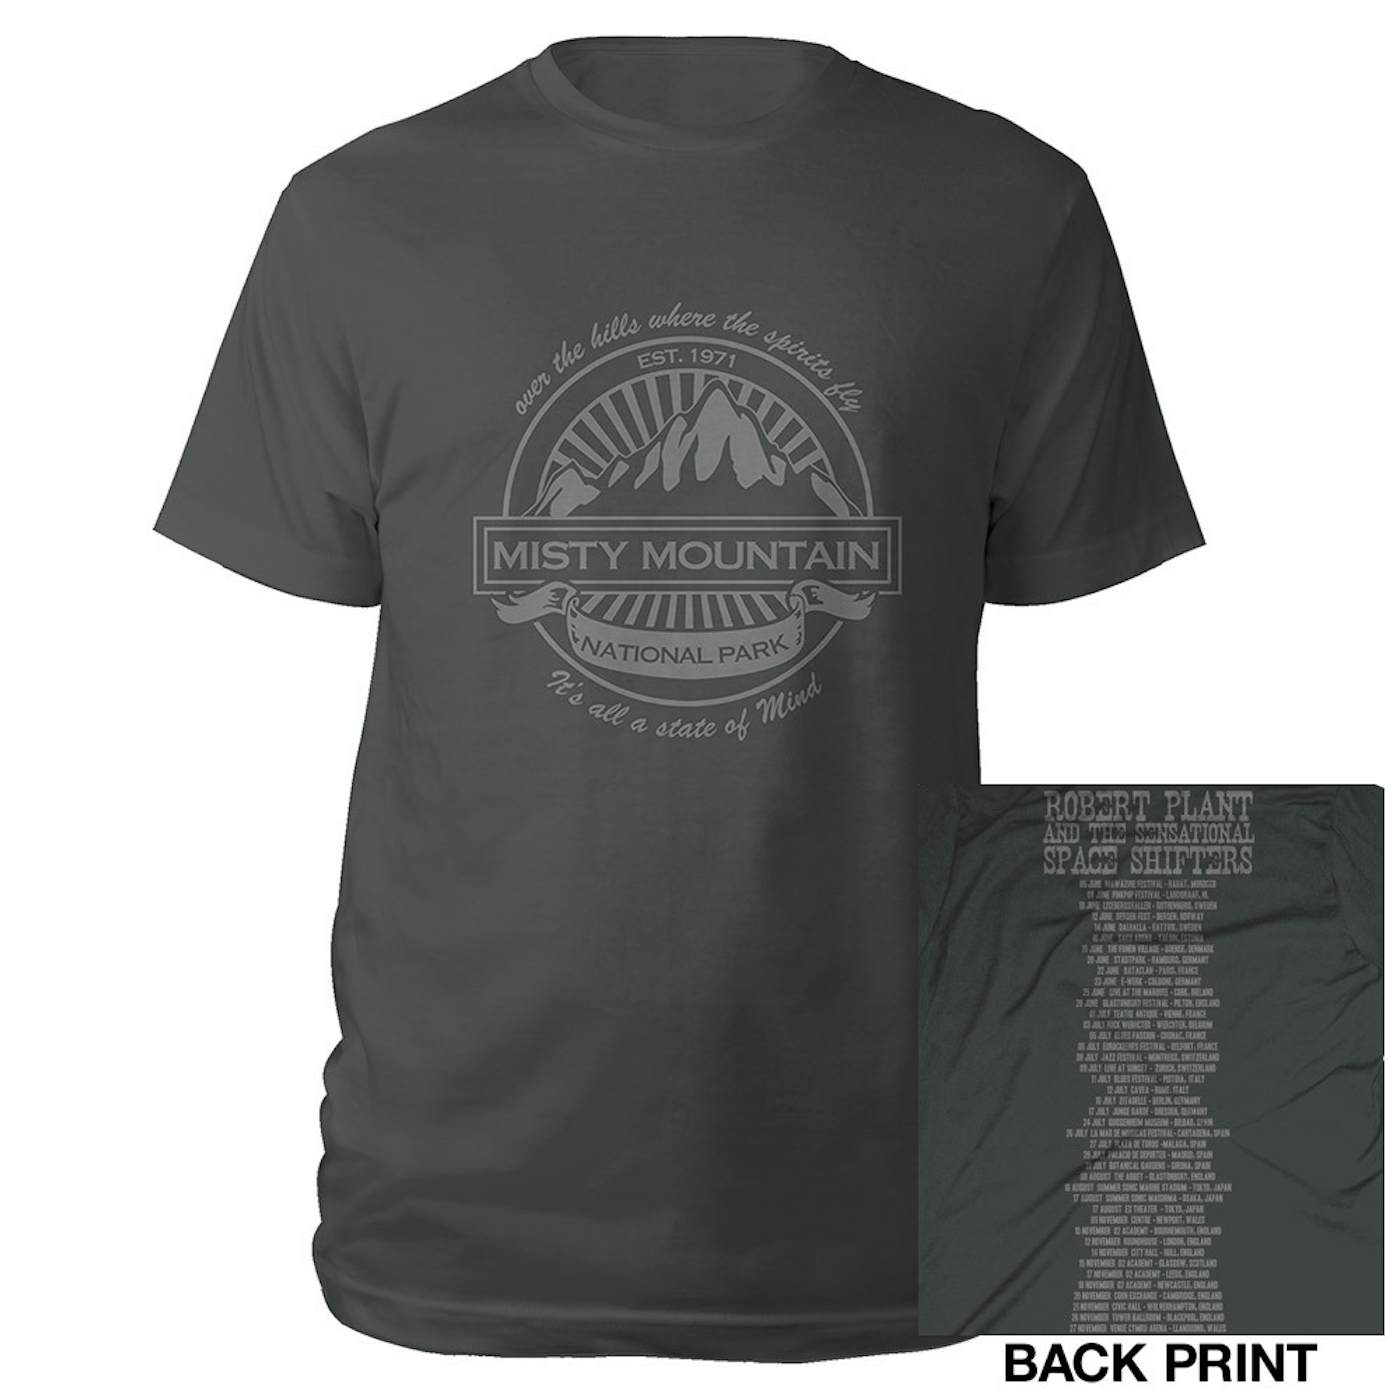 Robert Plant Misty Mountain/Itin T-shirt